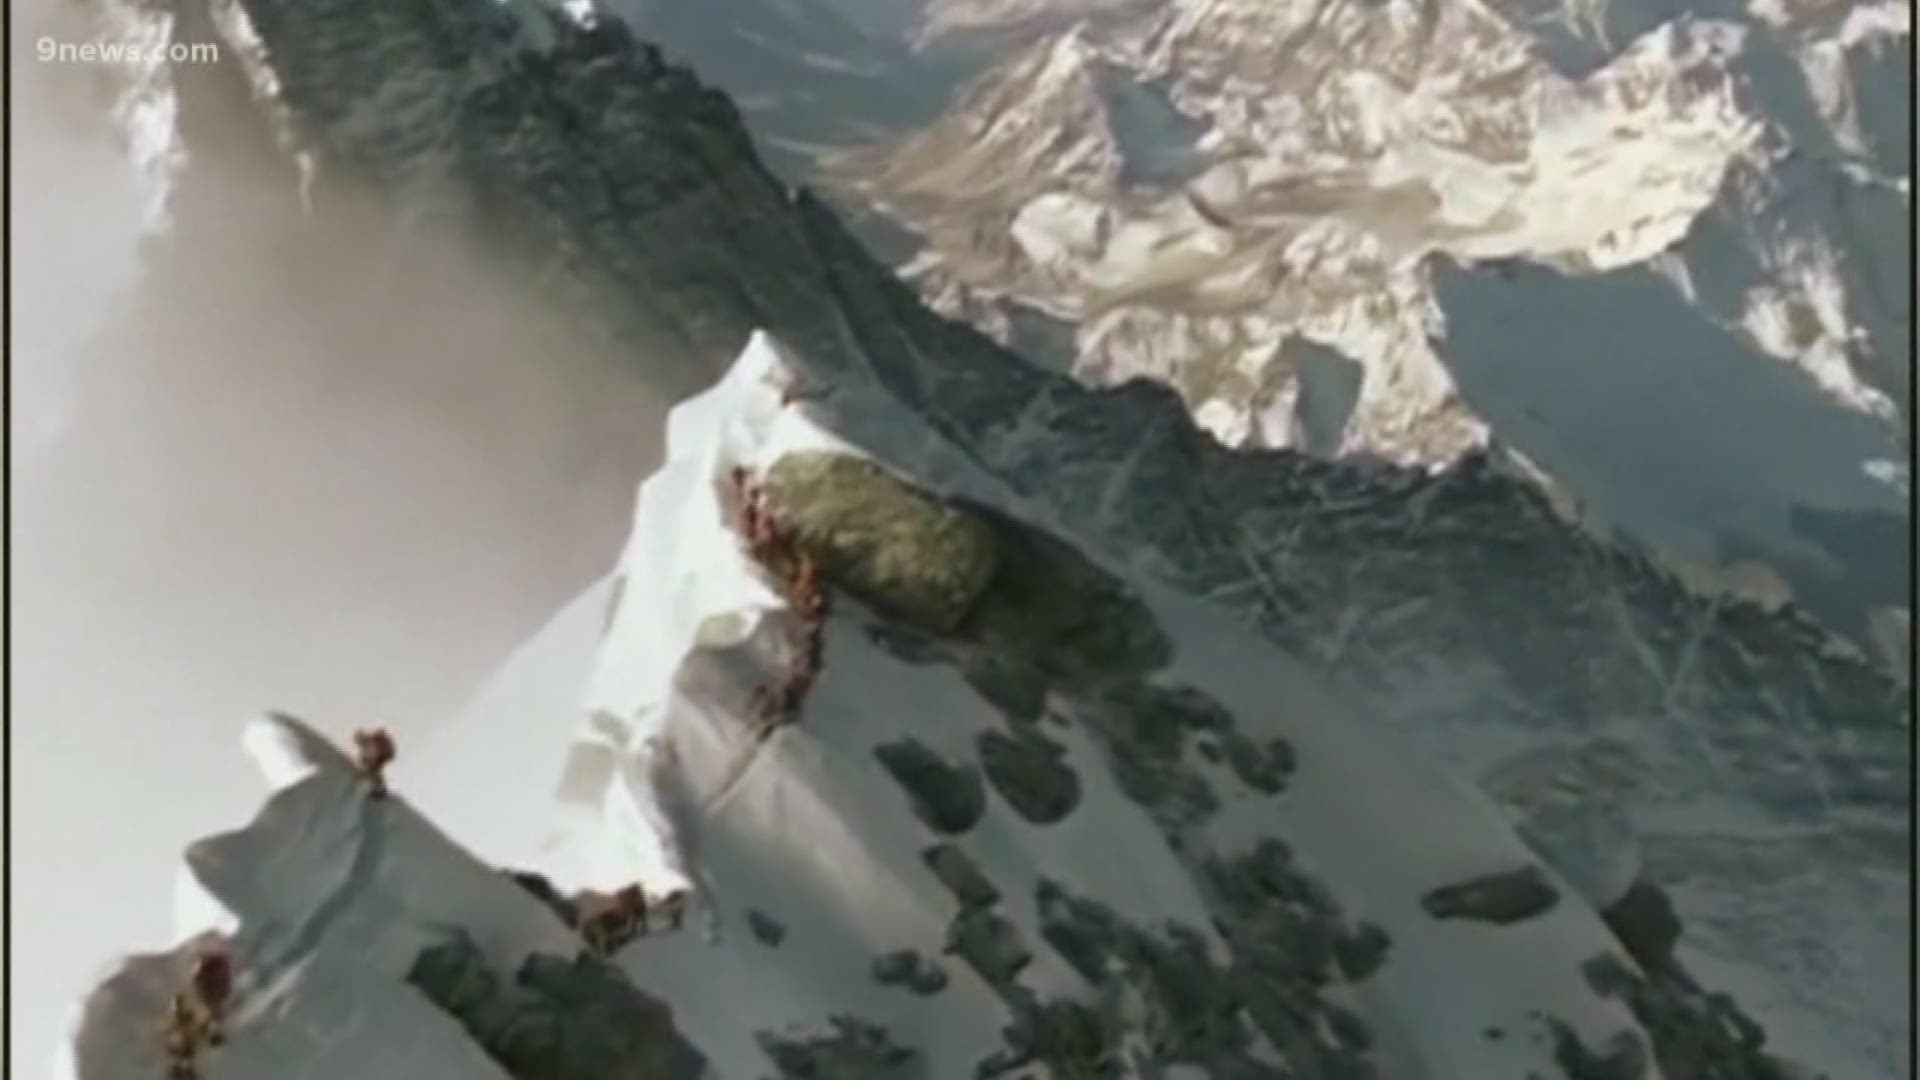 Boulder Colorado attorney dies while descending Mount Everest 9news com